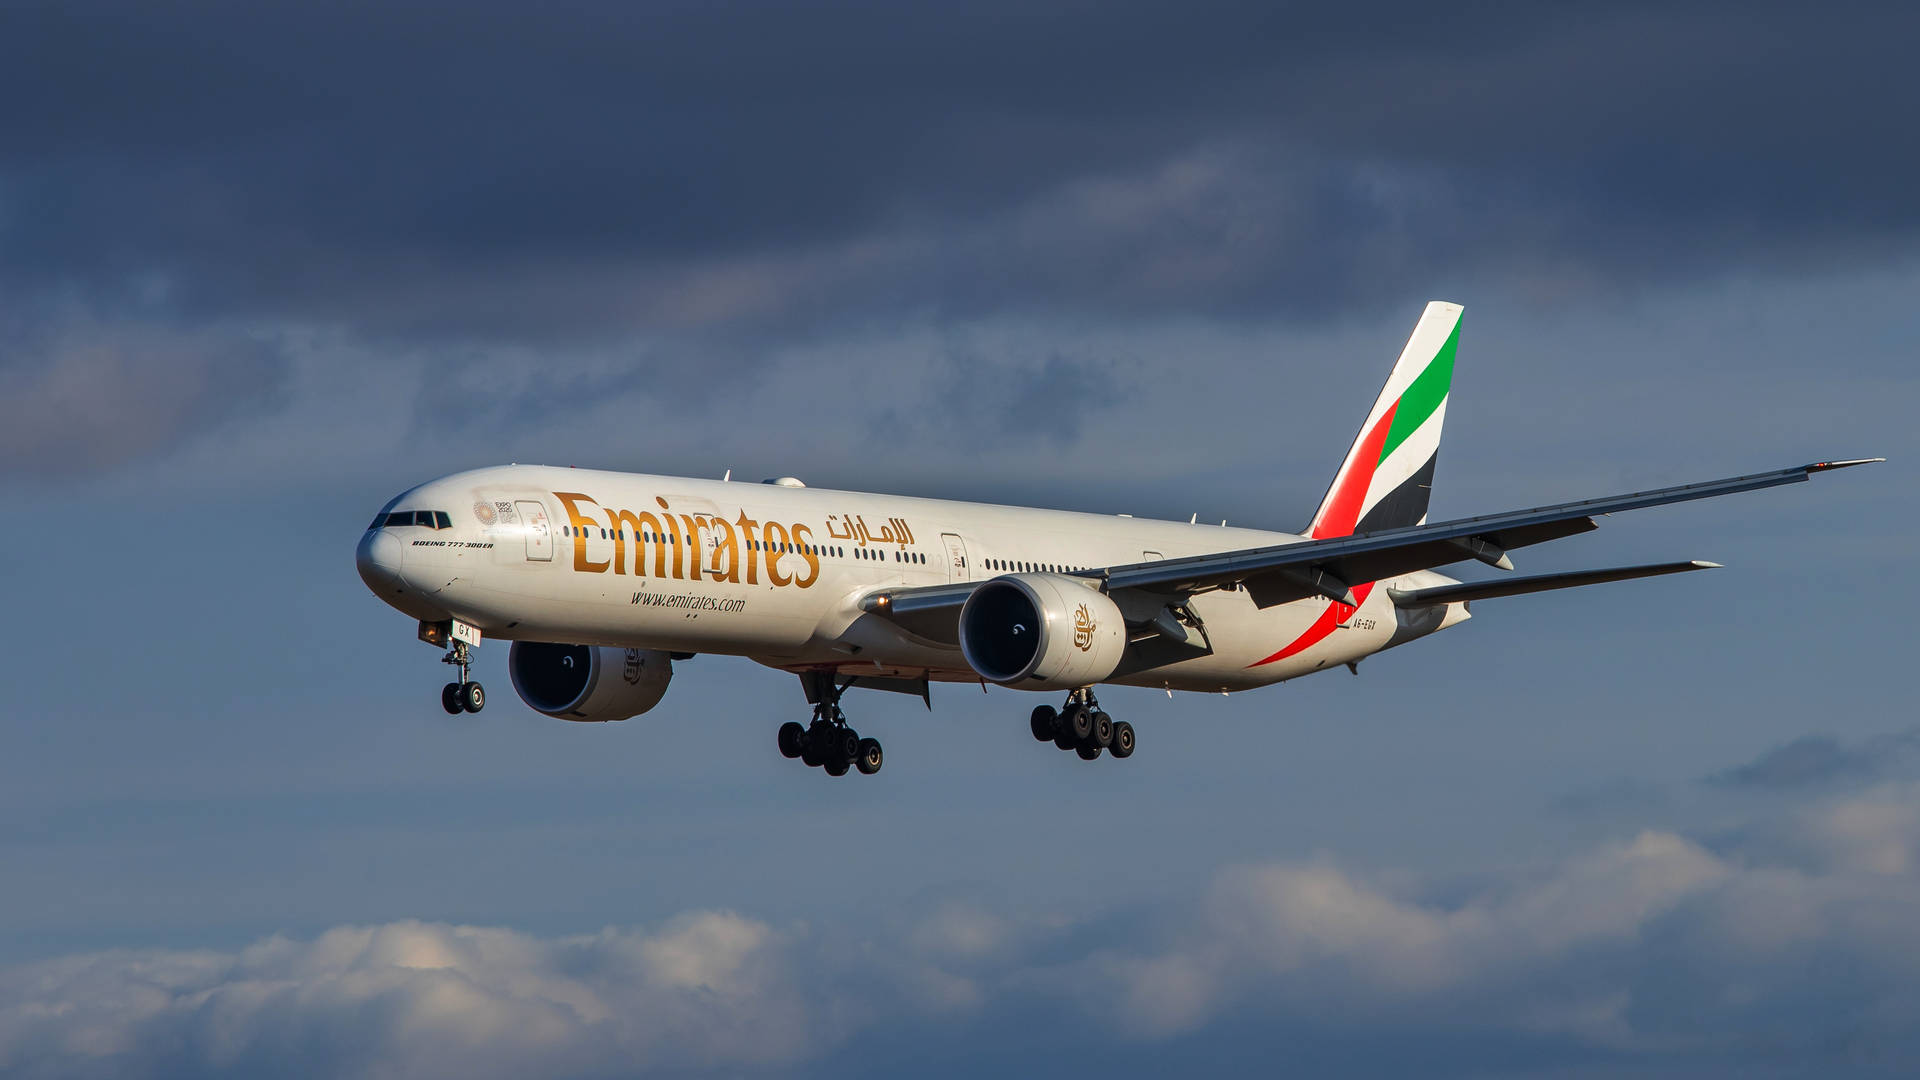 Hd Emirates Plane Flying